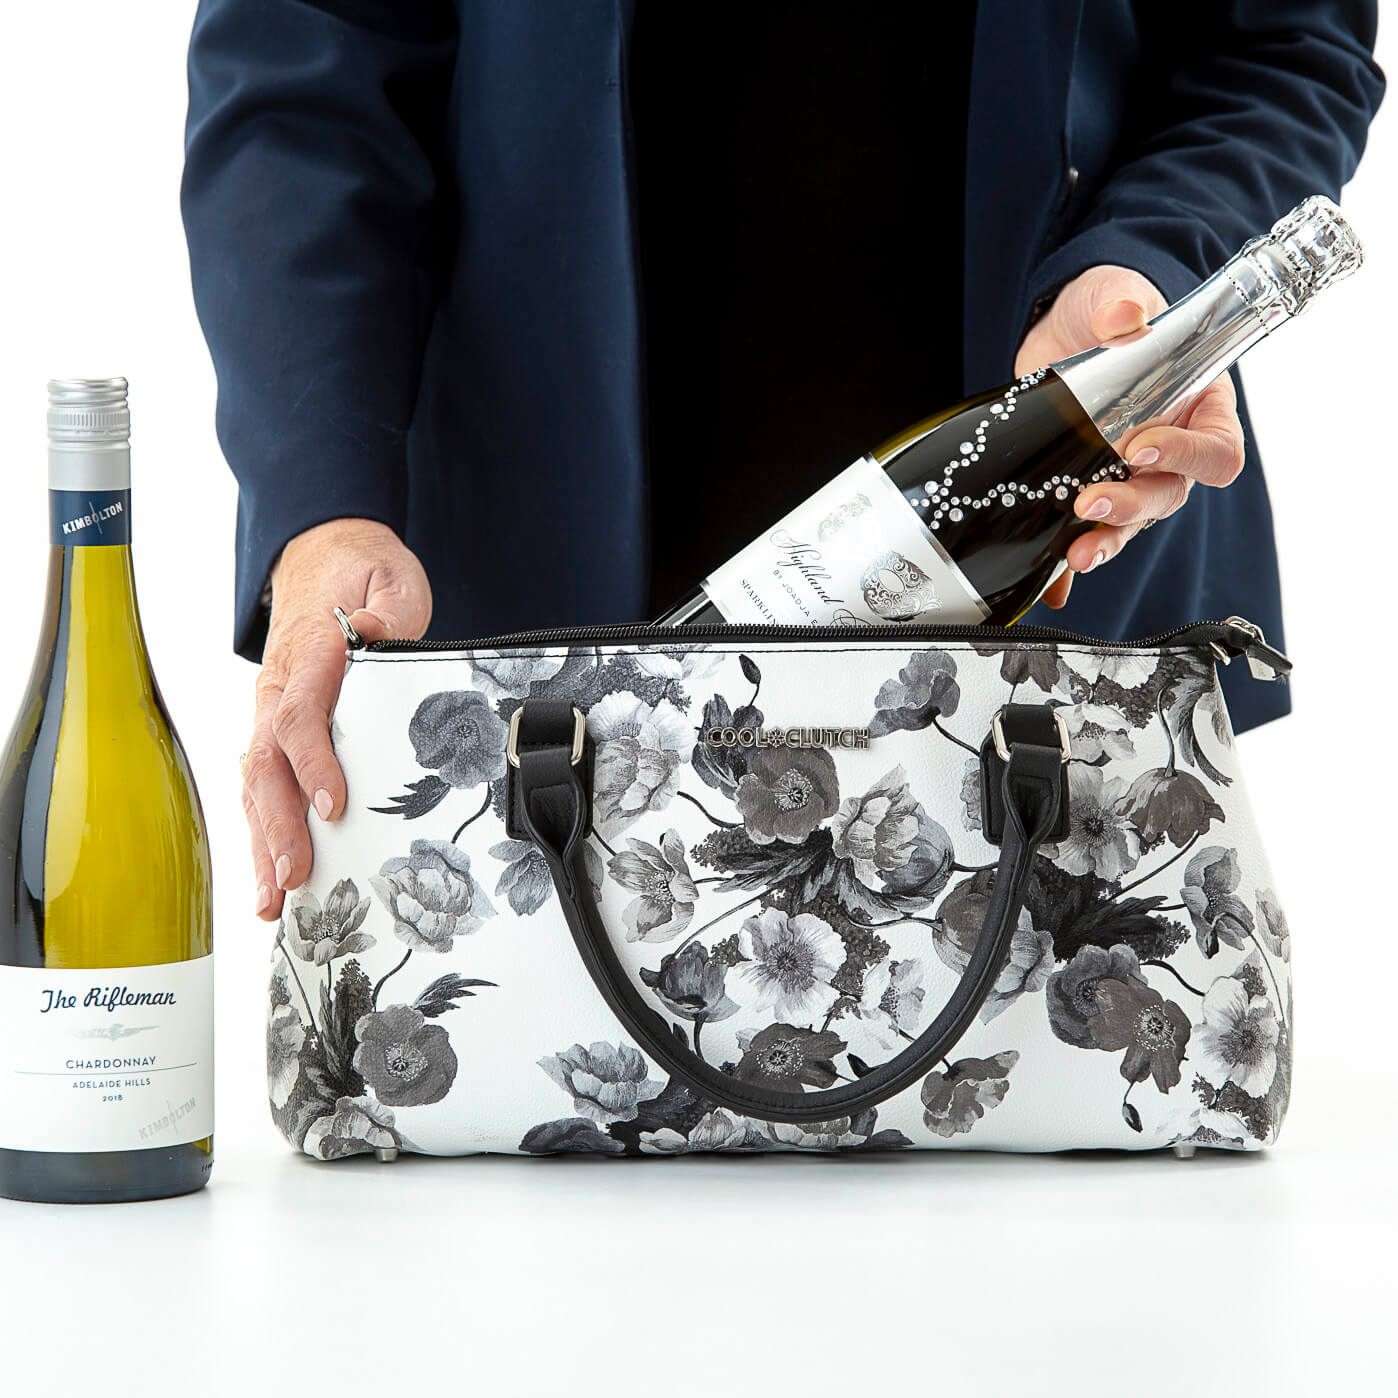 Barbara Cool Clutch (Black & White Flower) Cooler bags - Cool Clutch cooler bag handbag insulated wine lunch handbags